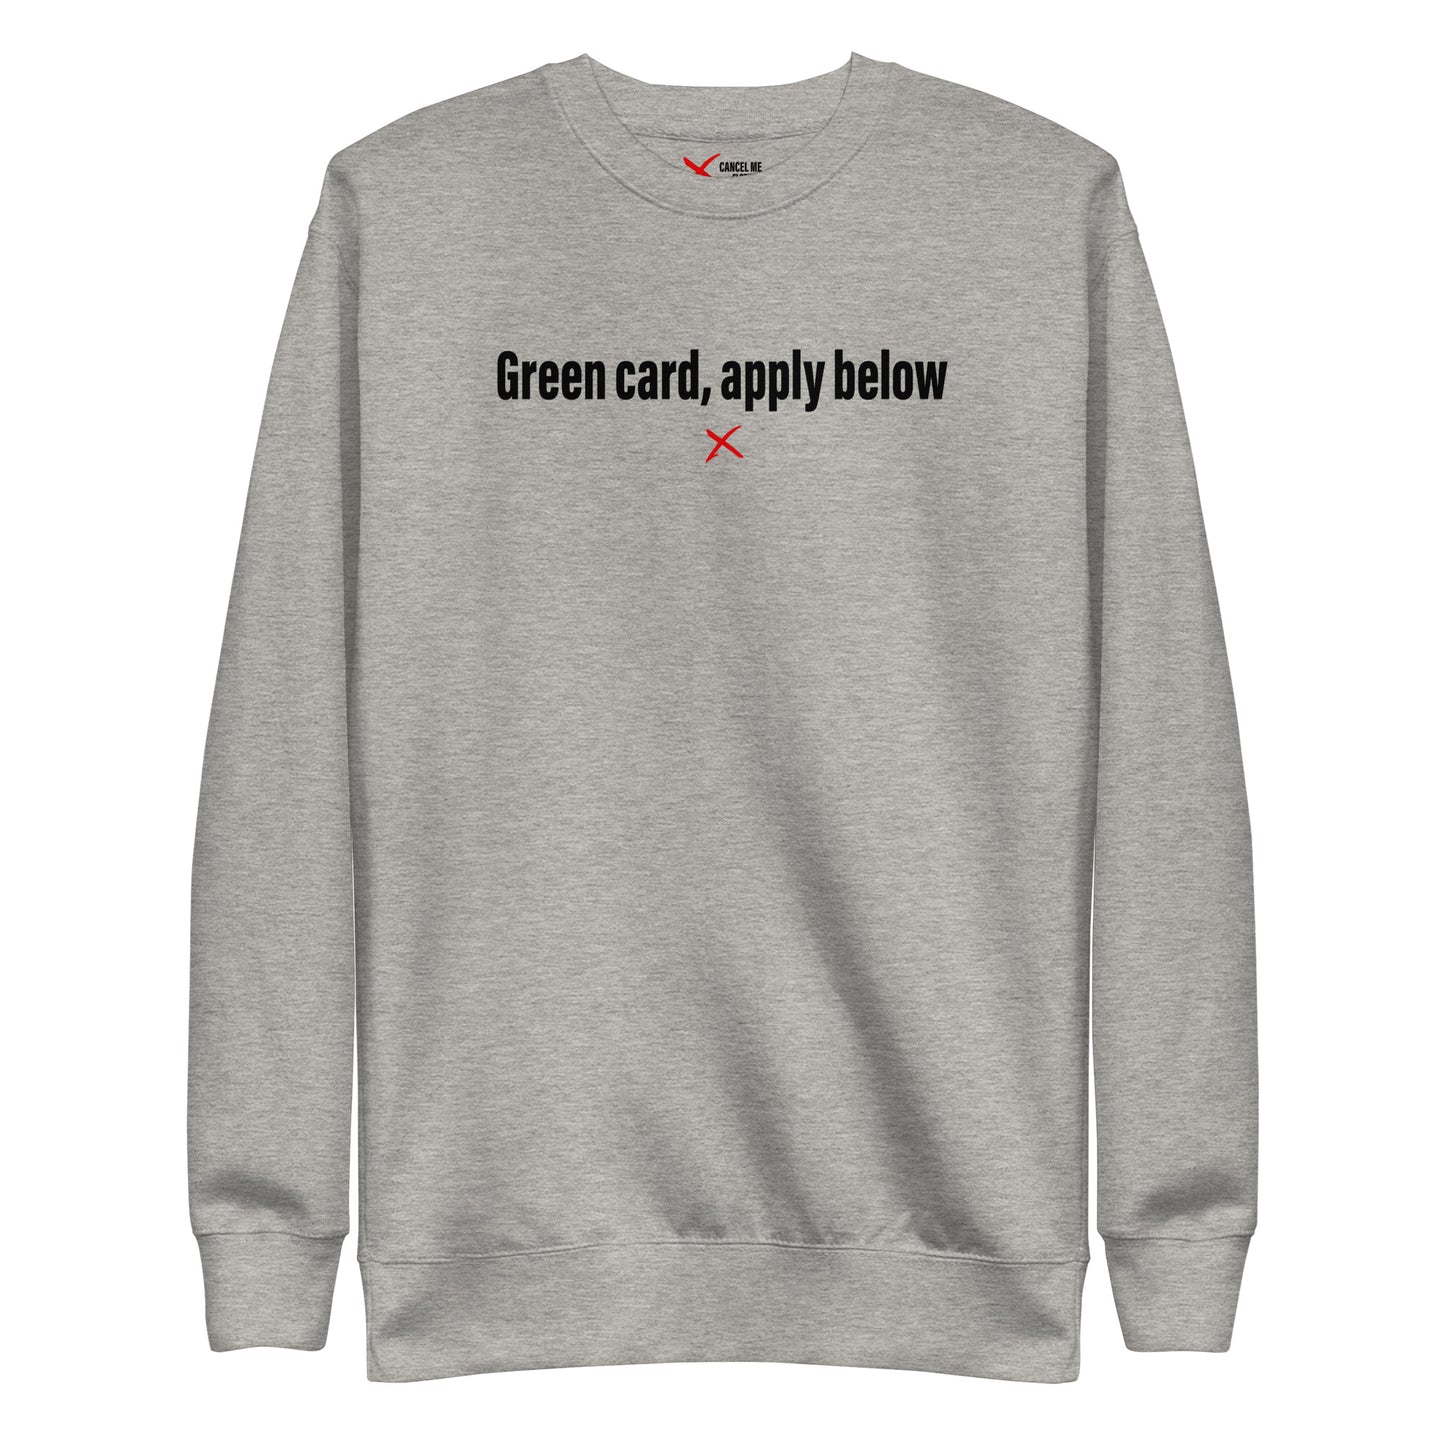 Green card, apply below - Sweatshirt